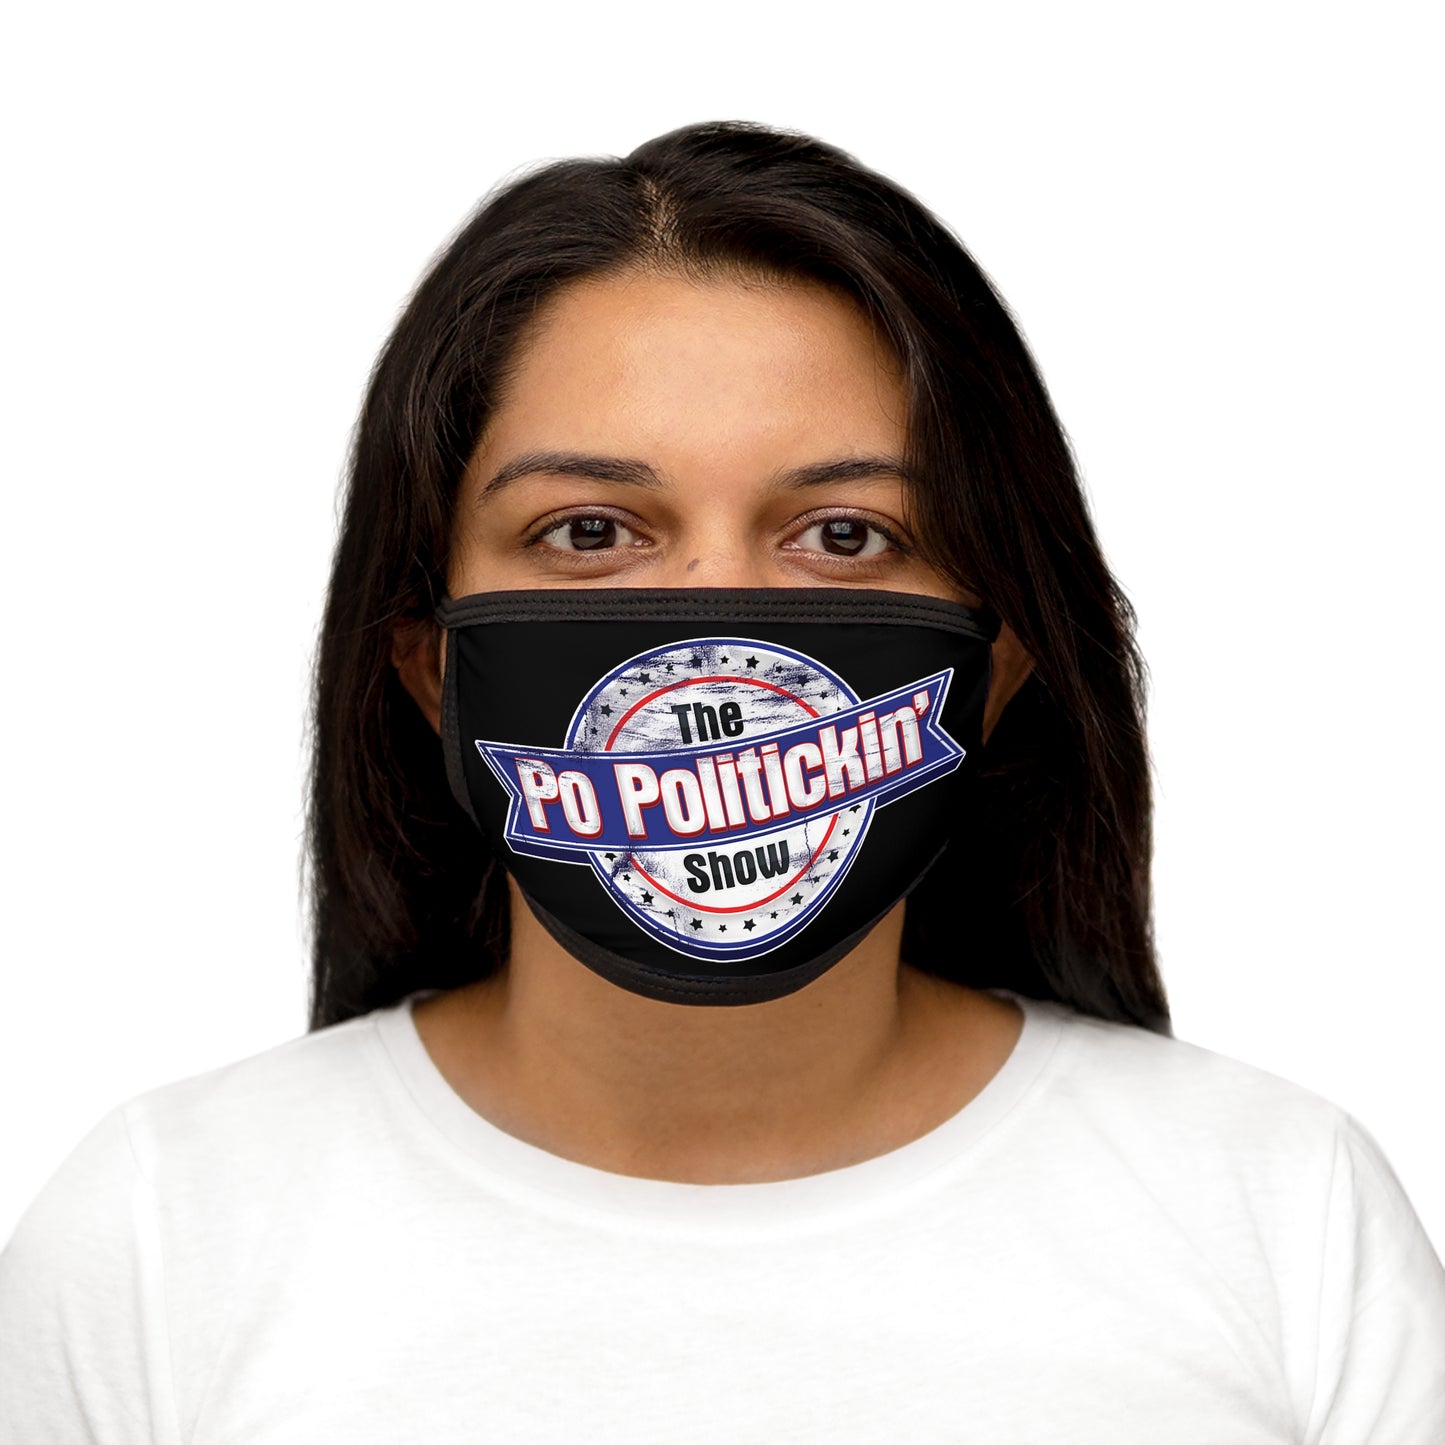 Po Politickin Mixed-Fabric Face Mask